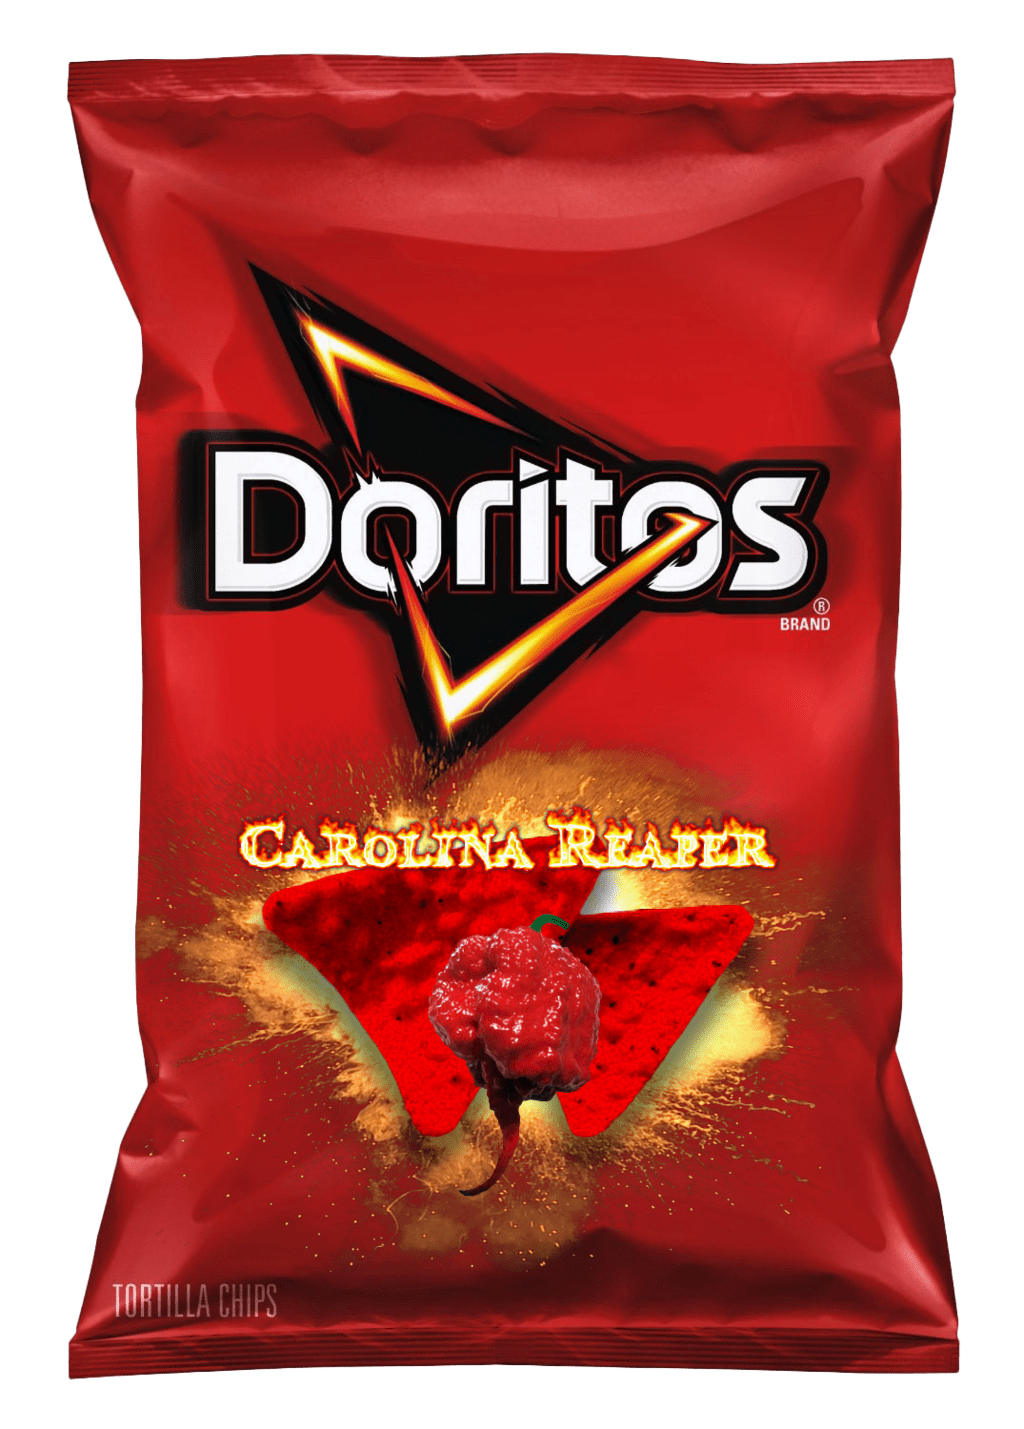 A bag of Doritos Carolina Reaper flavored tortilla chips - Doritos